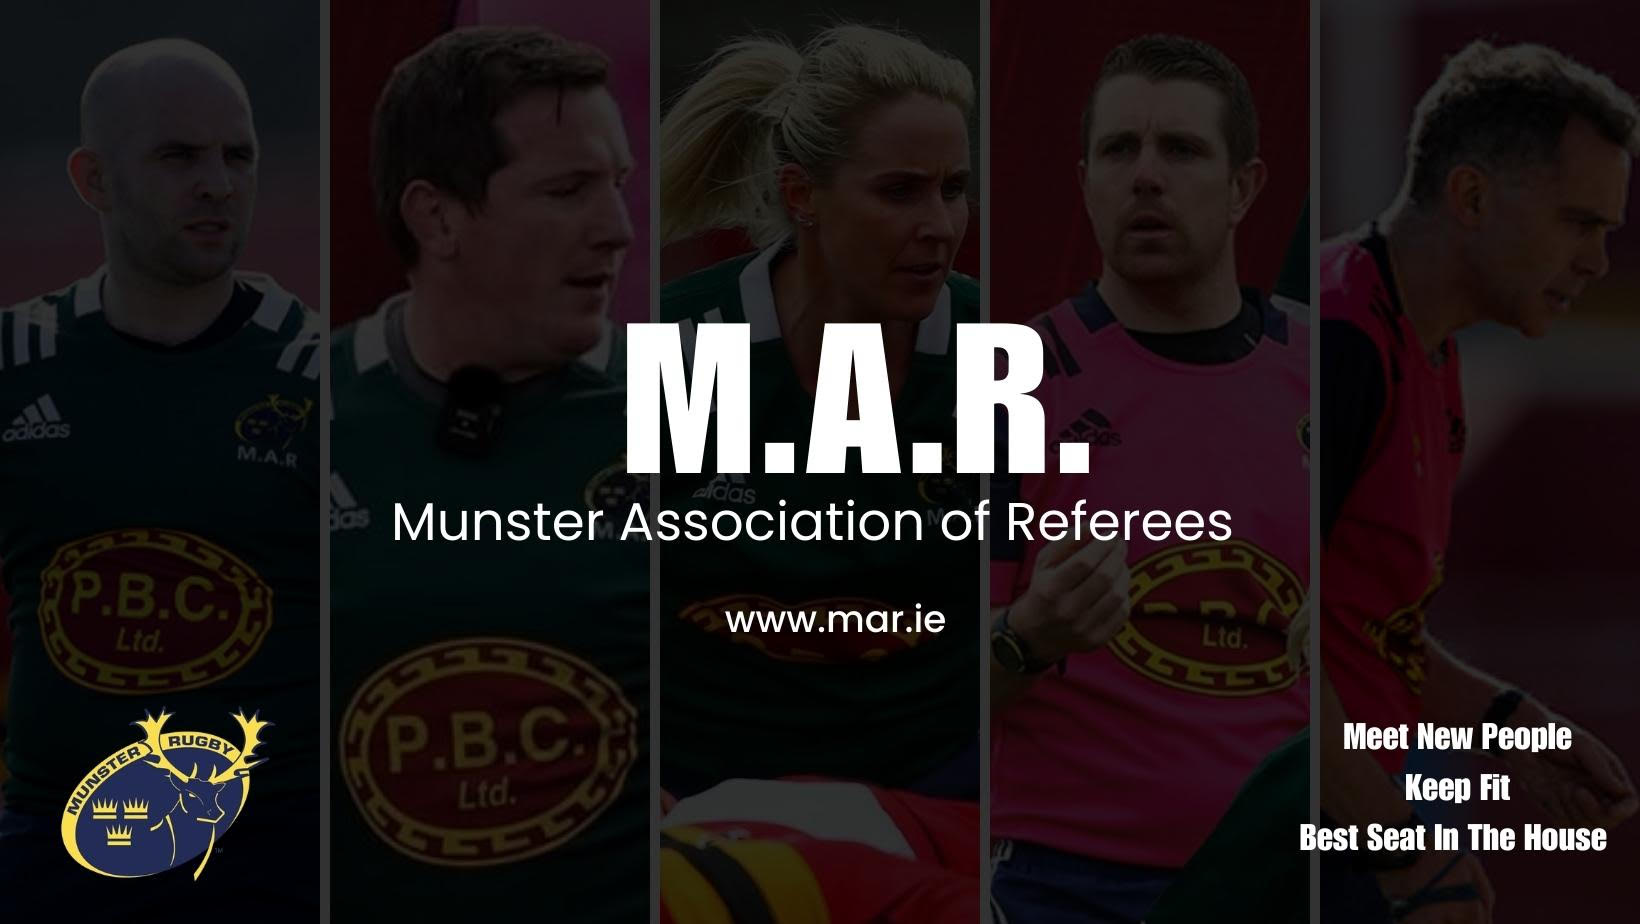 Munster Association of Referees